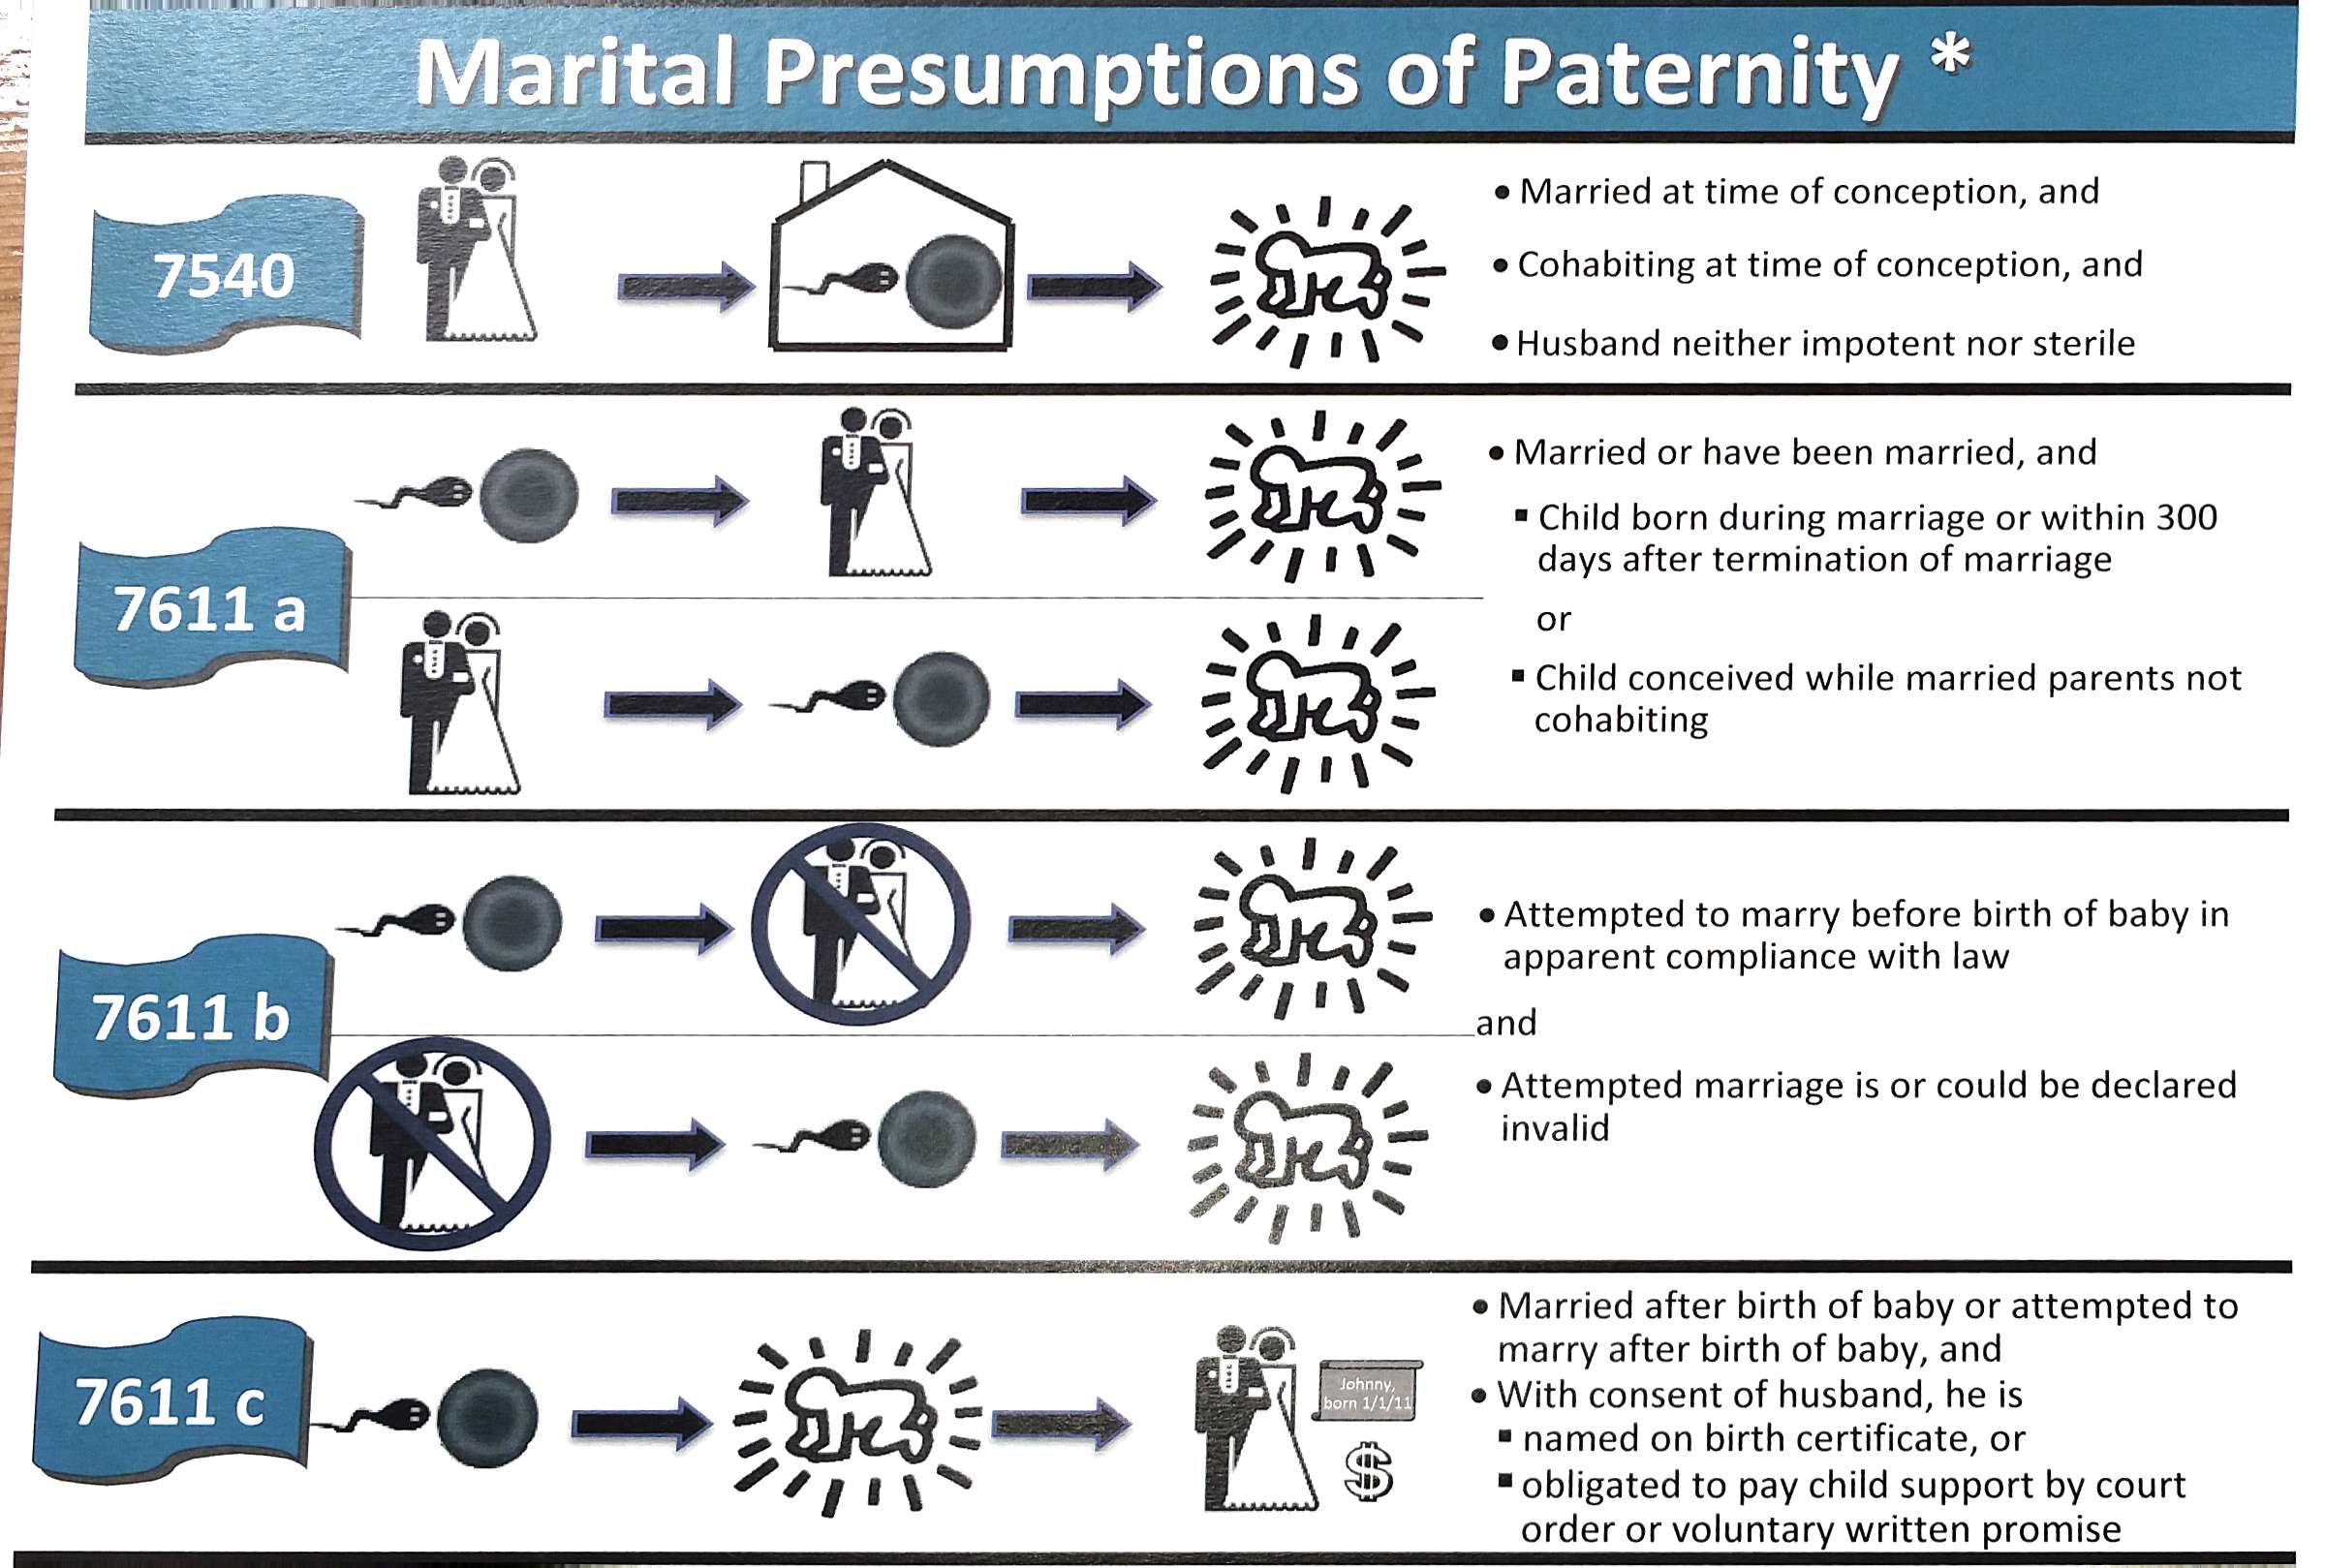 Marital Presumptions of Paternity chart